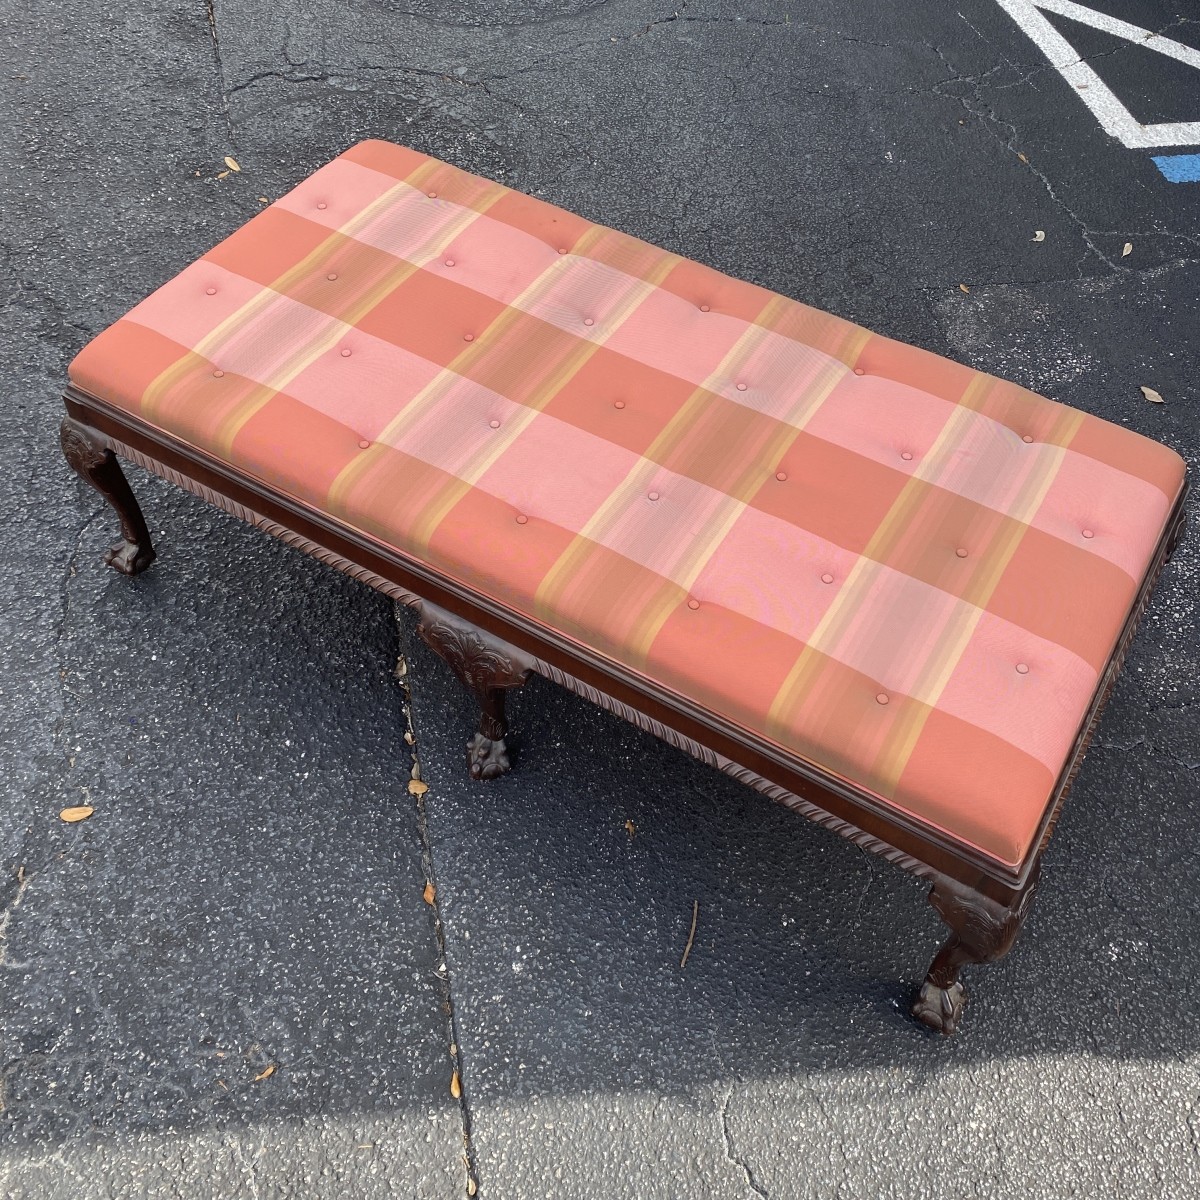 Baker Furniture Co. Upholstered Bench